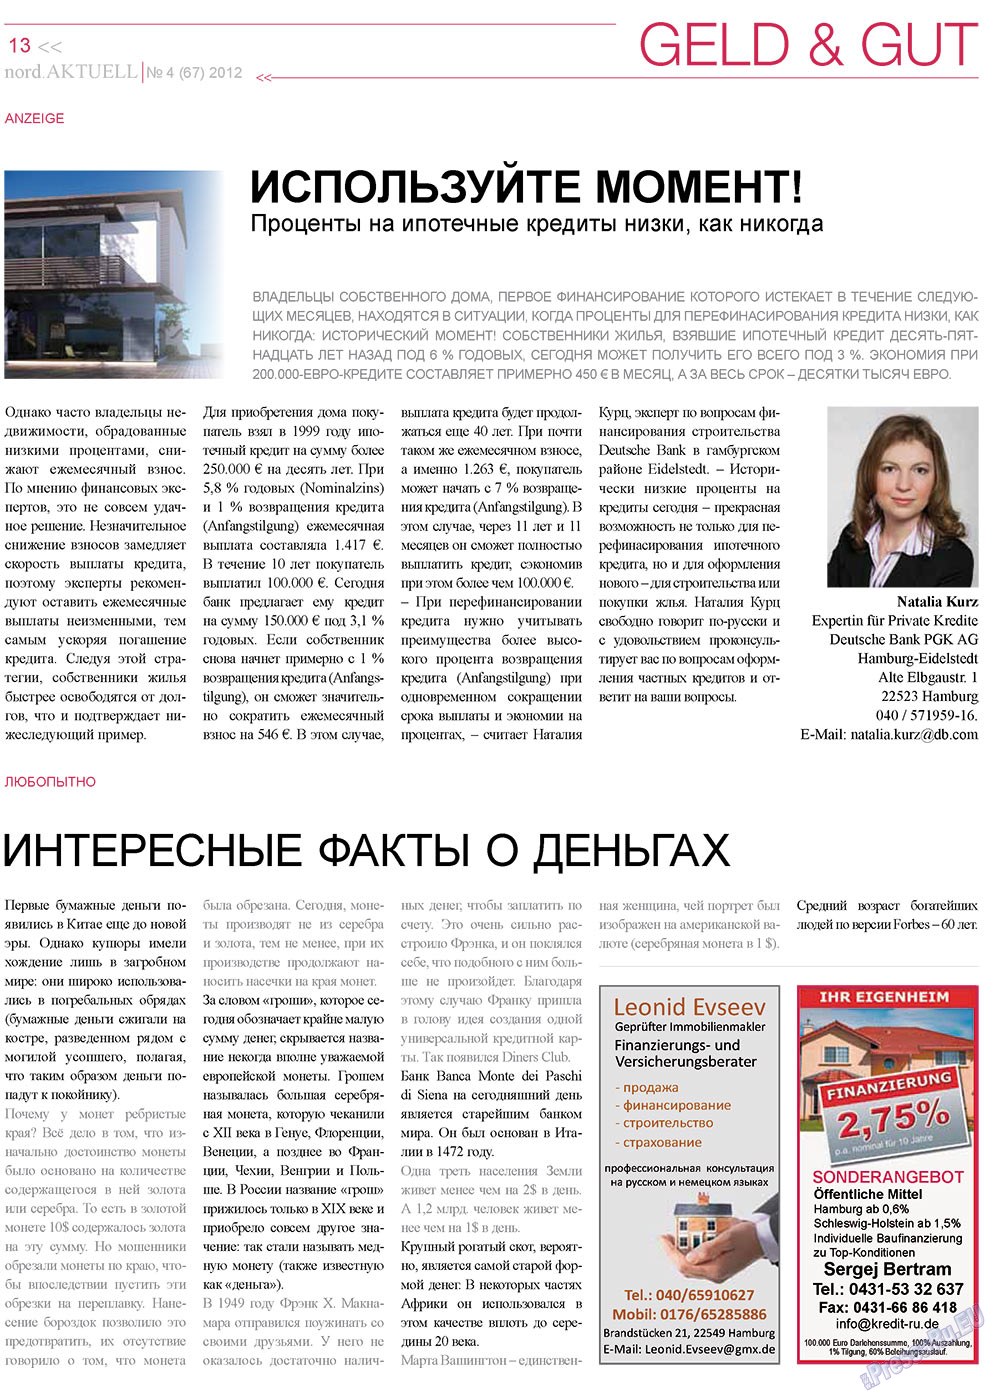 nord.Aktuell, газета. 2012 №4 стр.13